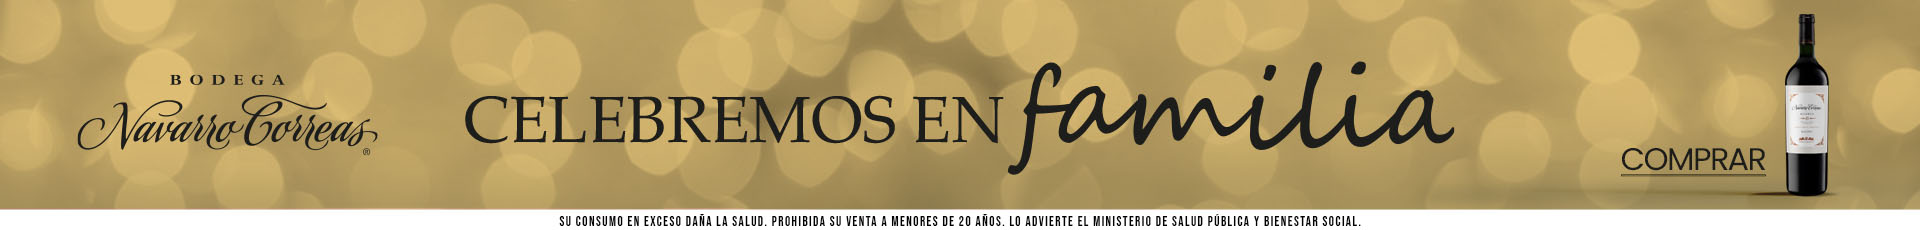 https://www.arete.com.py/navarro-correas?utm_source=ecommerce&utm_medium=banner+superior&utm_campaign=vino_navarro_correas